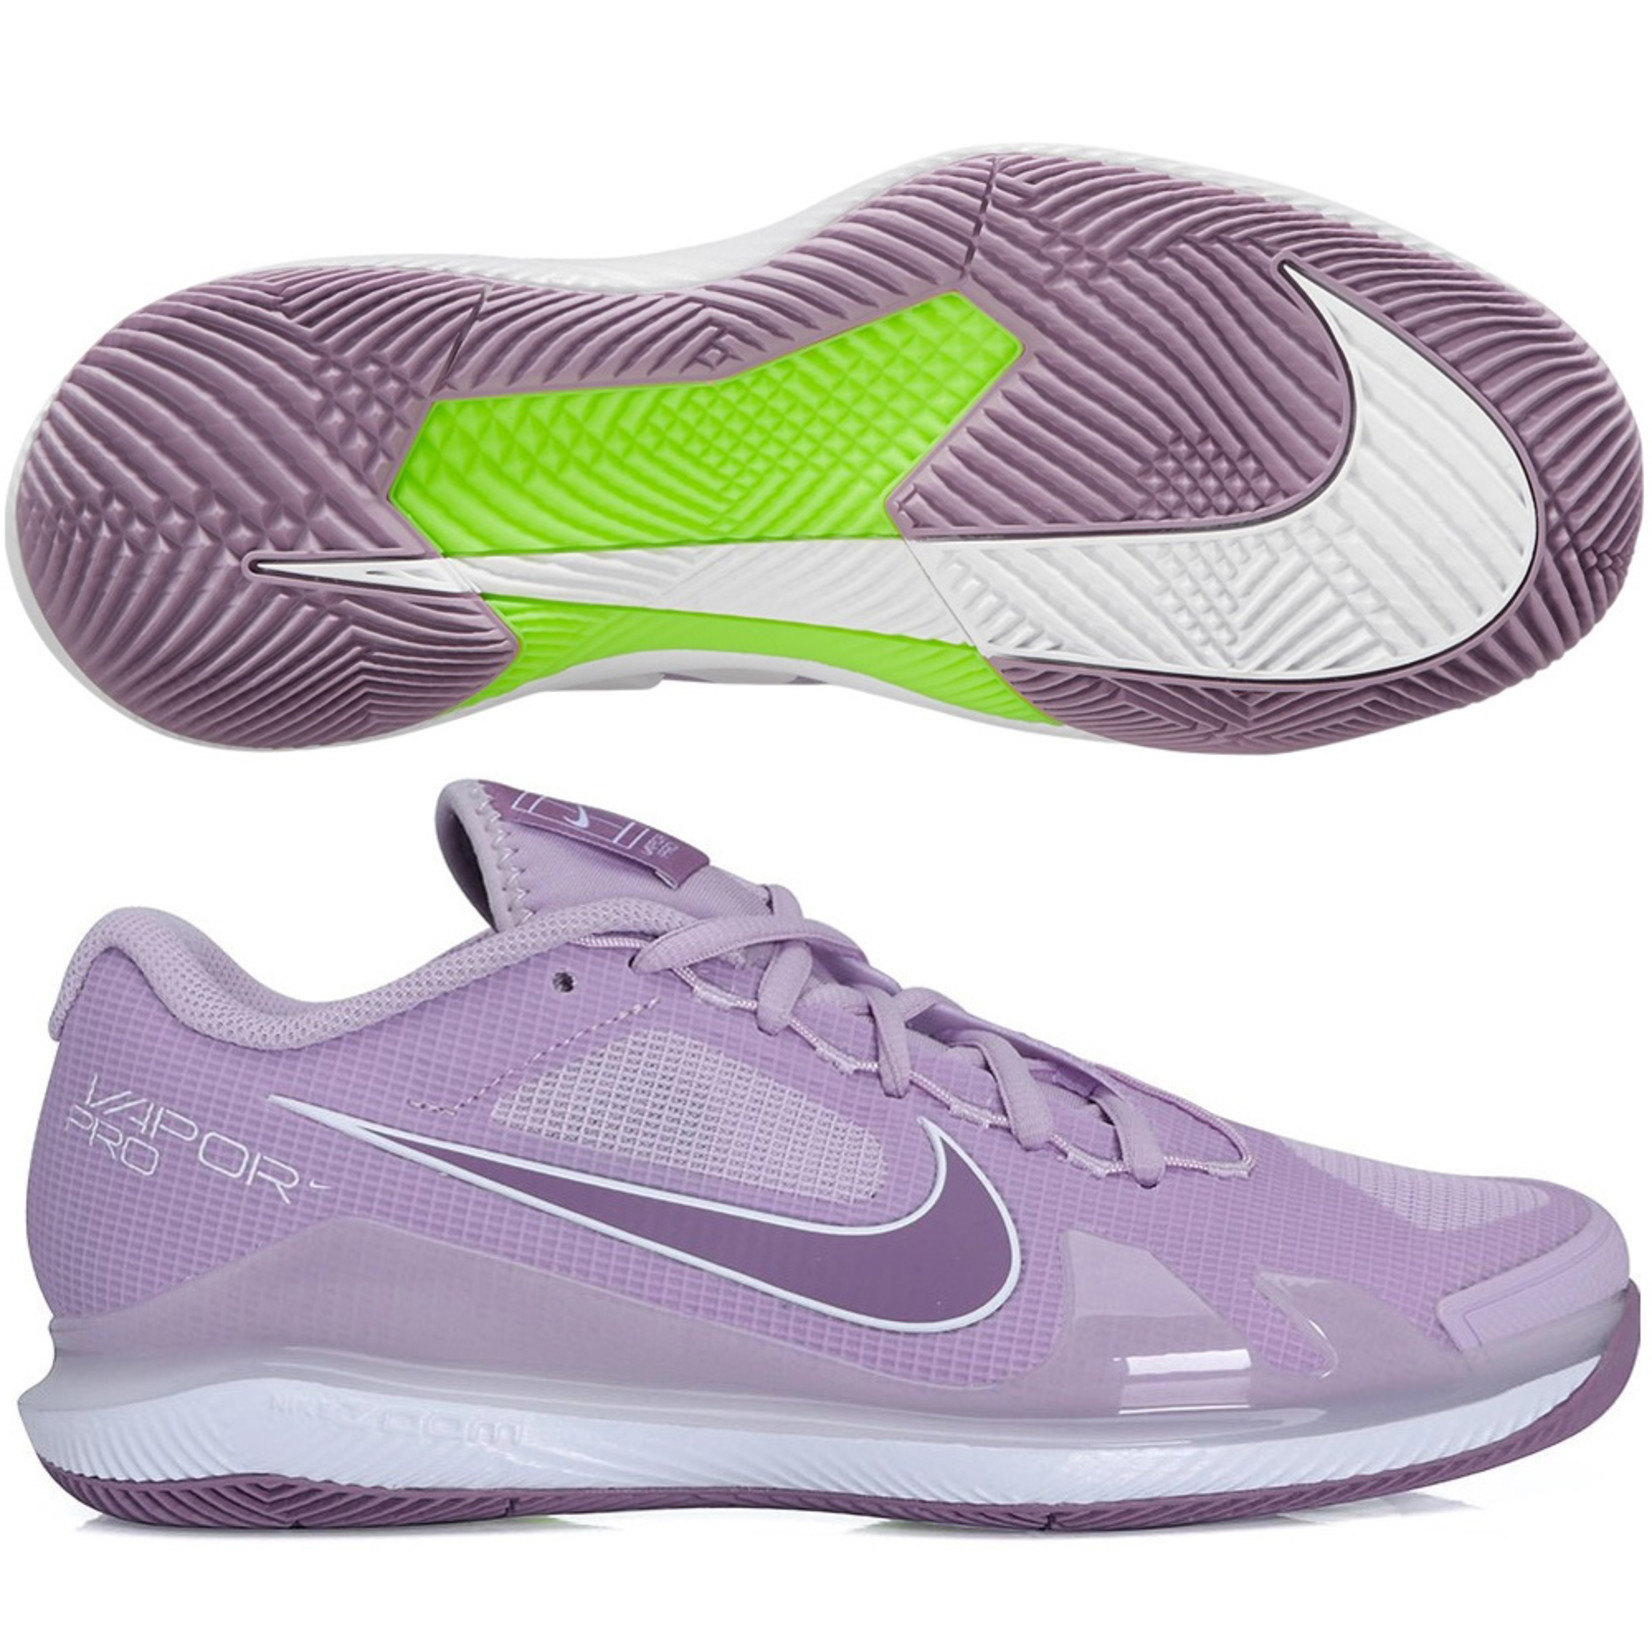 Nike - Air Zoom Vapor Pro Women's Tennis Shoes - Sports